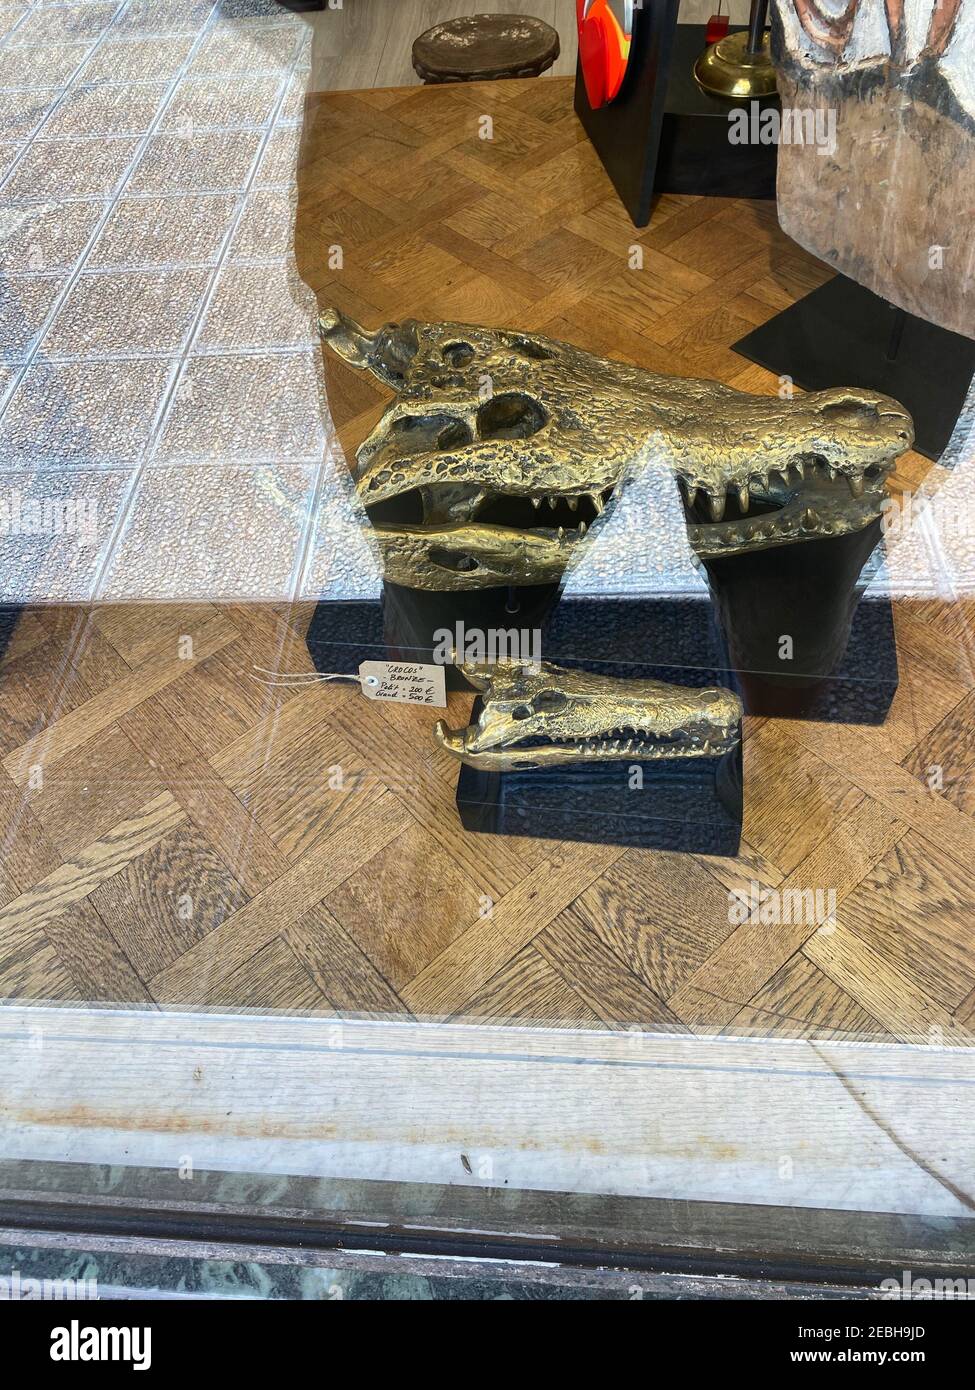 Crocodile in shop window Stock Photo